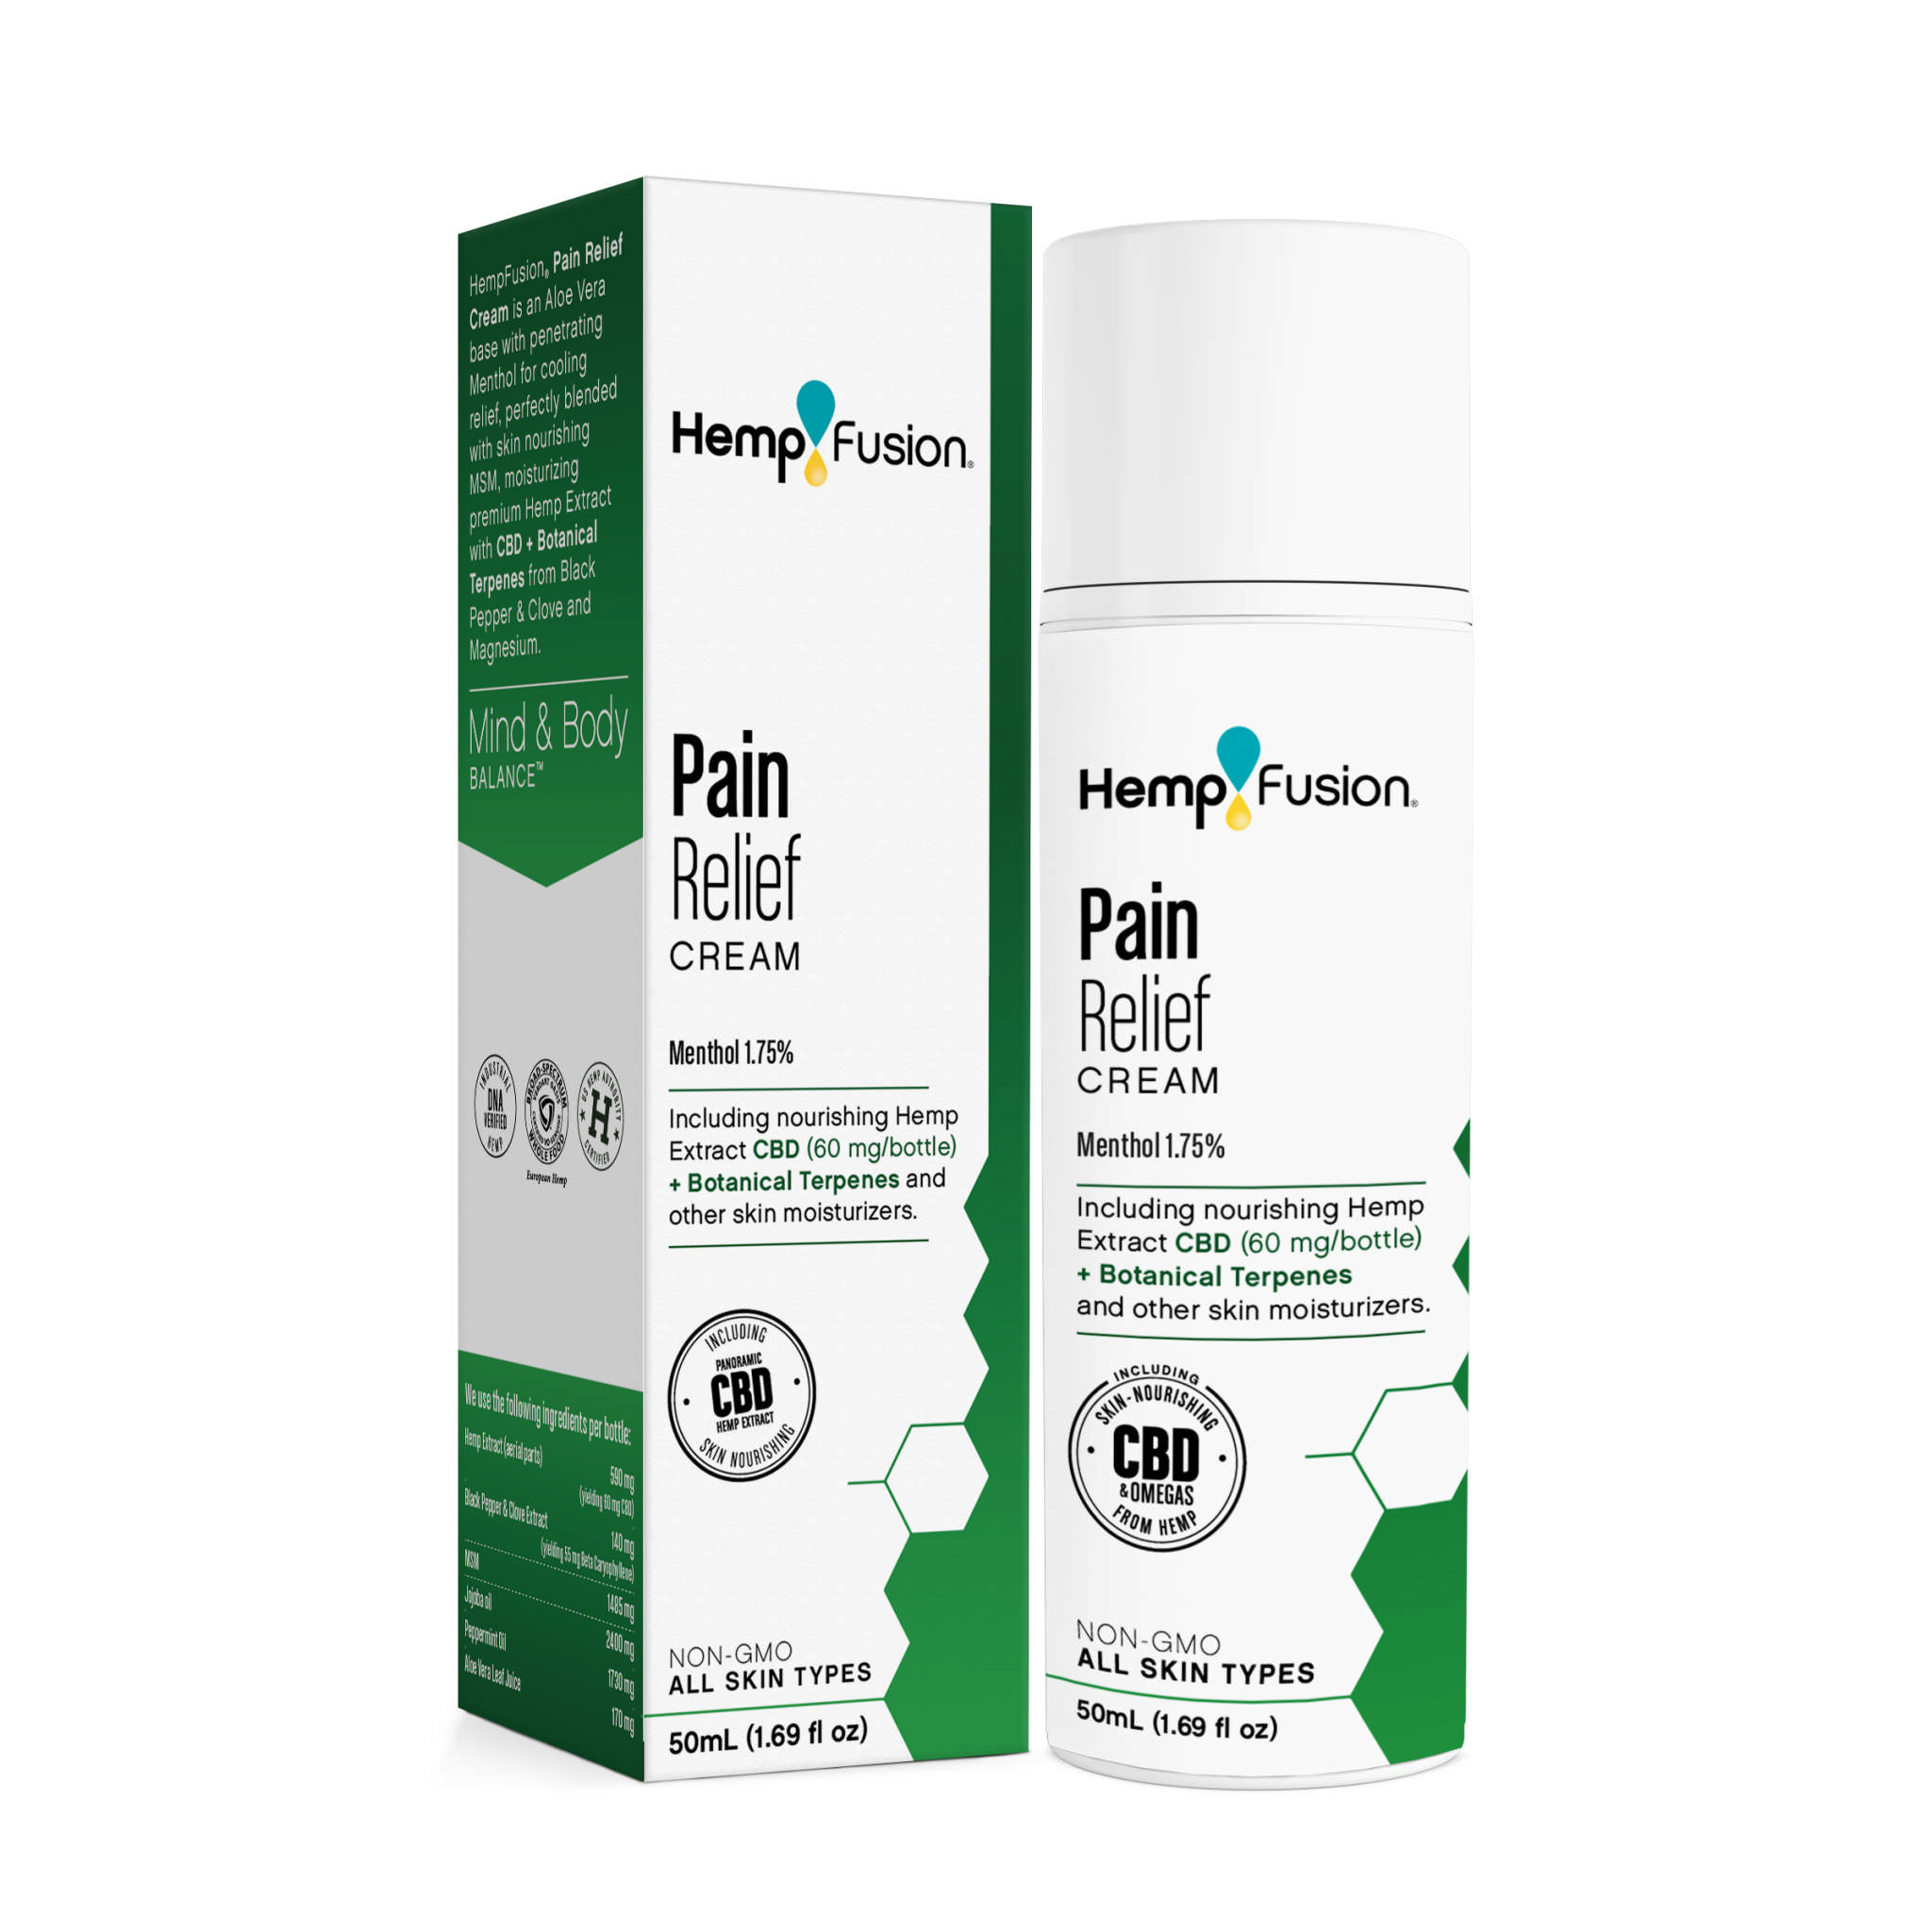 Hemp Fusion - Pain Relief crm + 60 mg Cbd